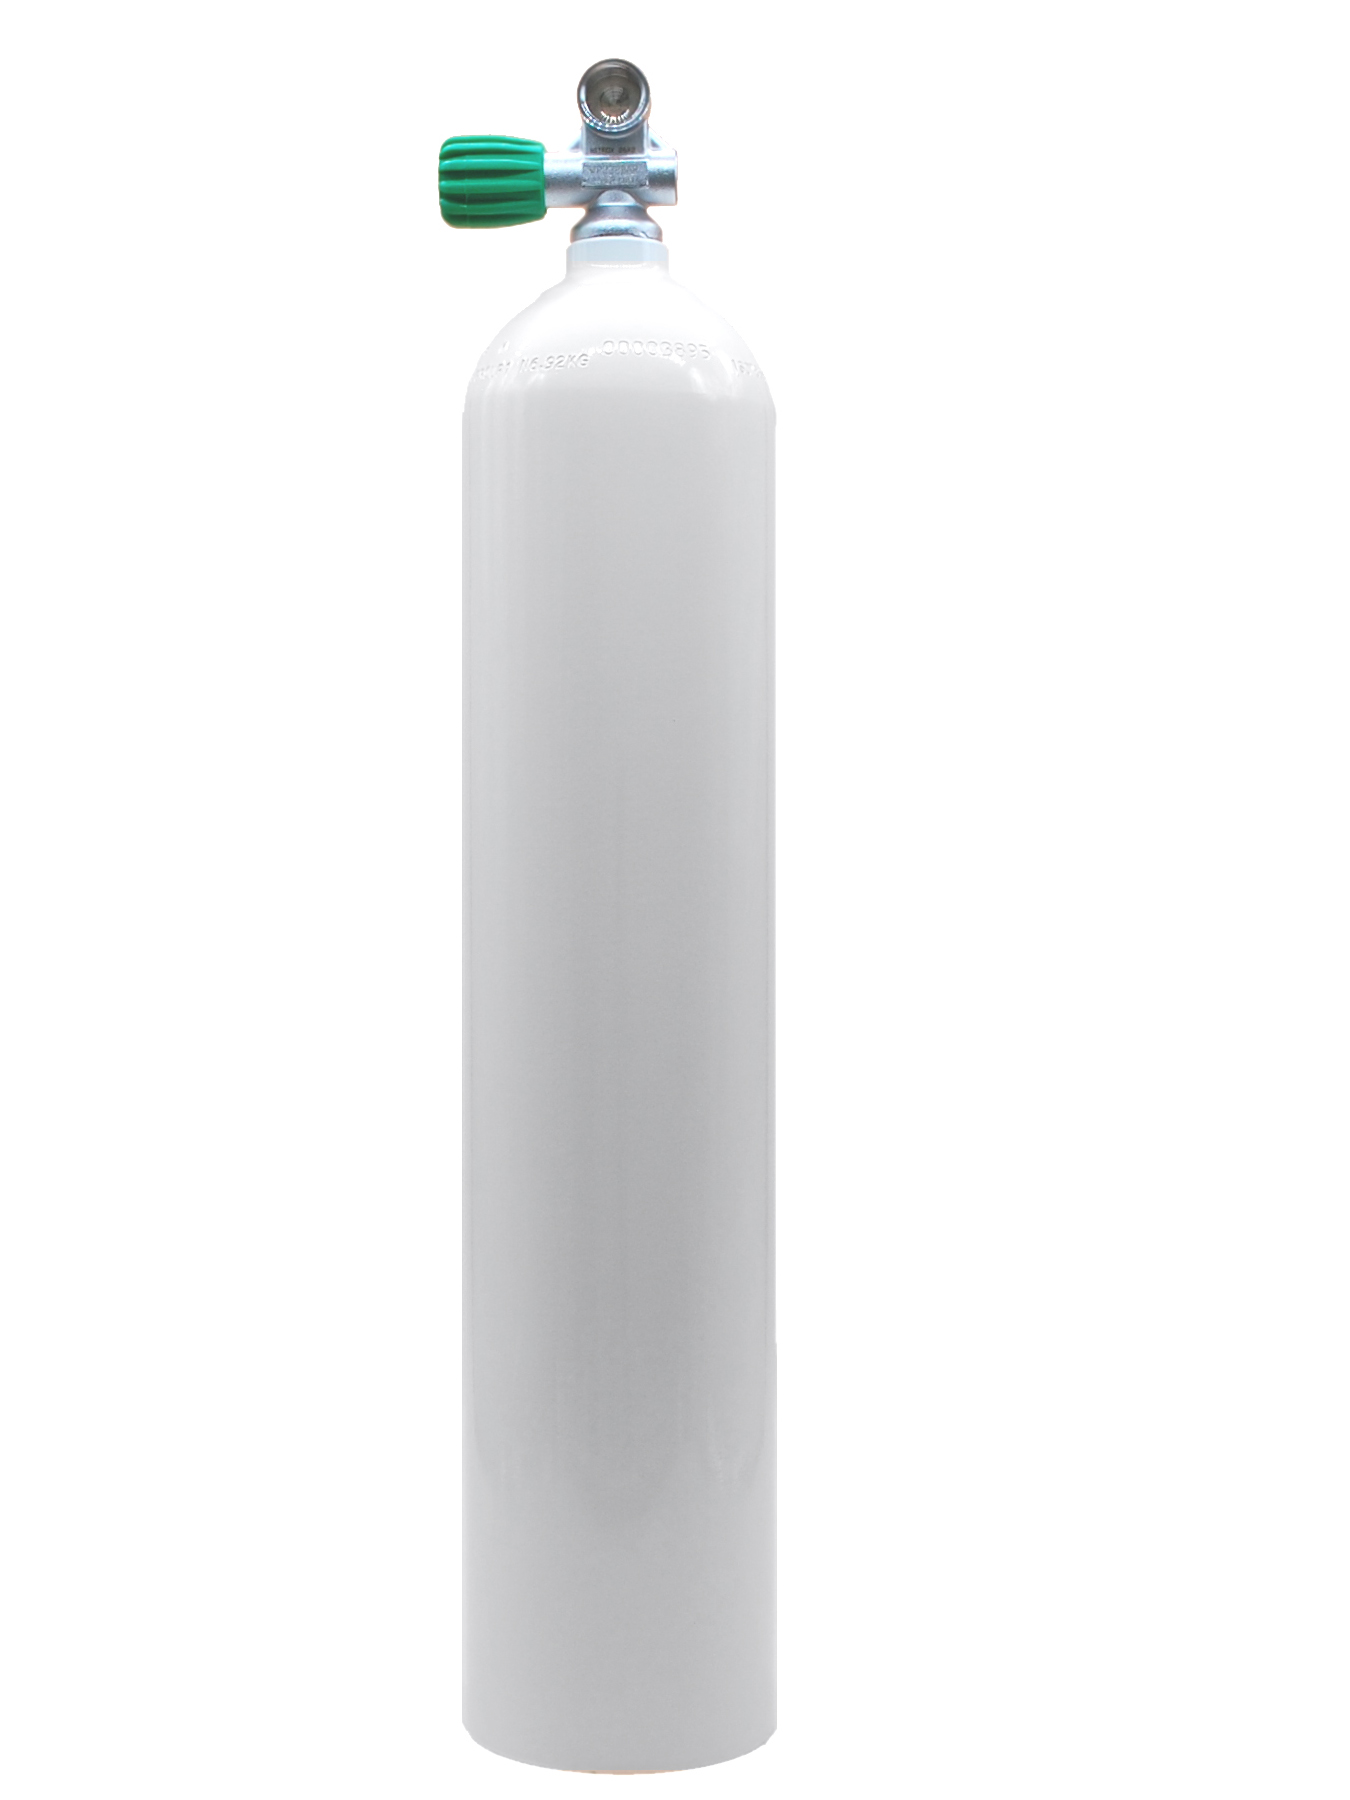 MES Tauchflasche Alu 5,7L weiss mit Nitroxventil links